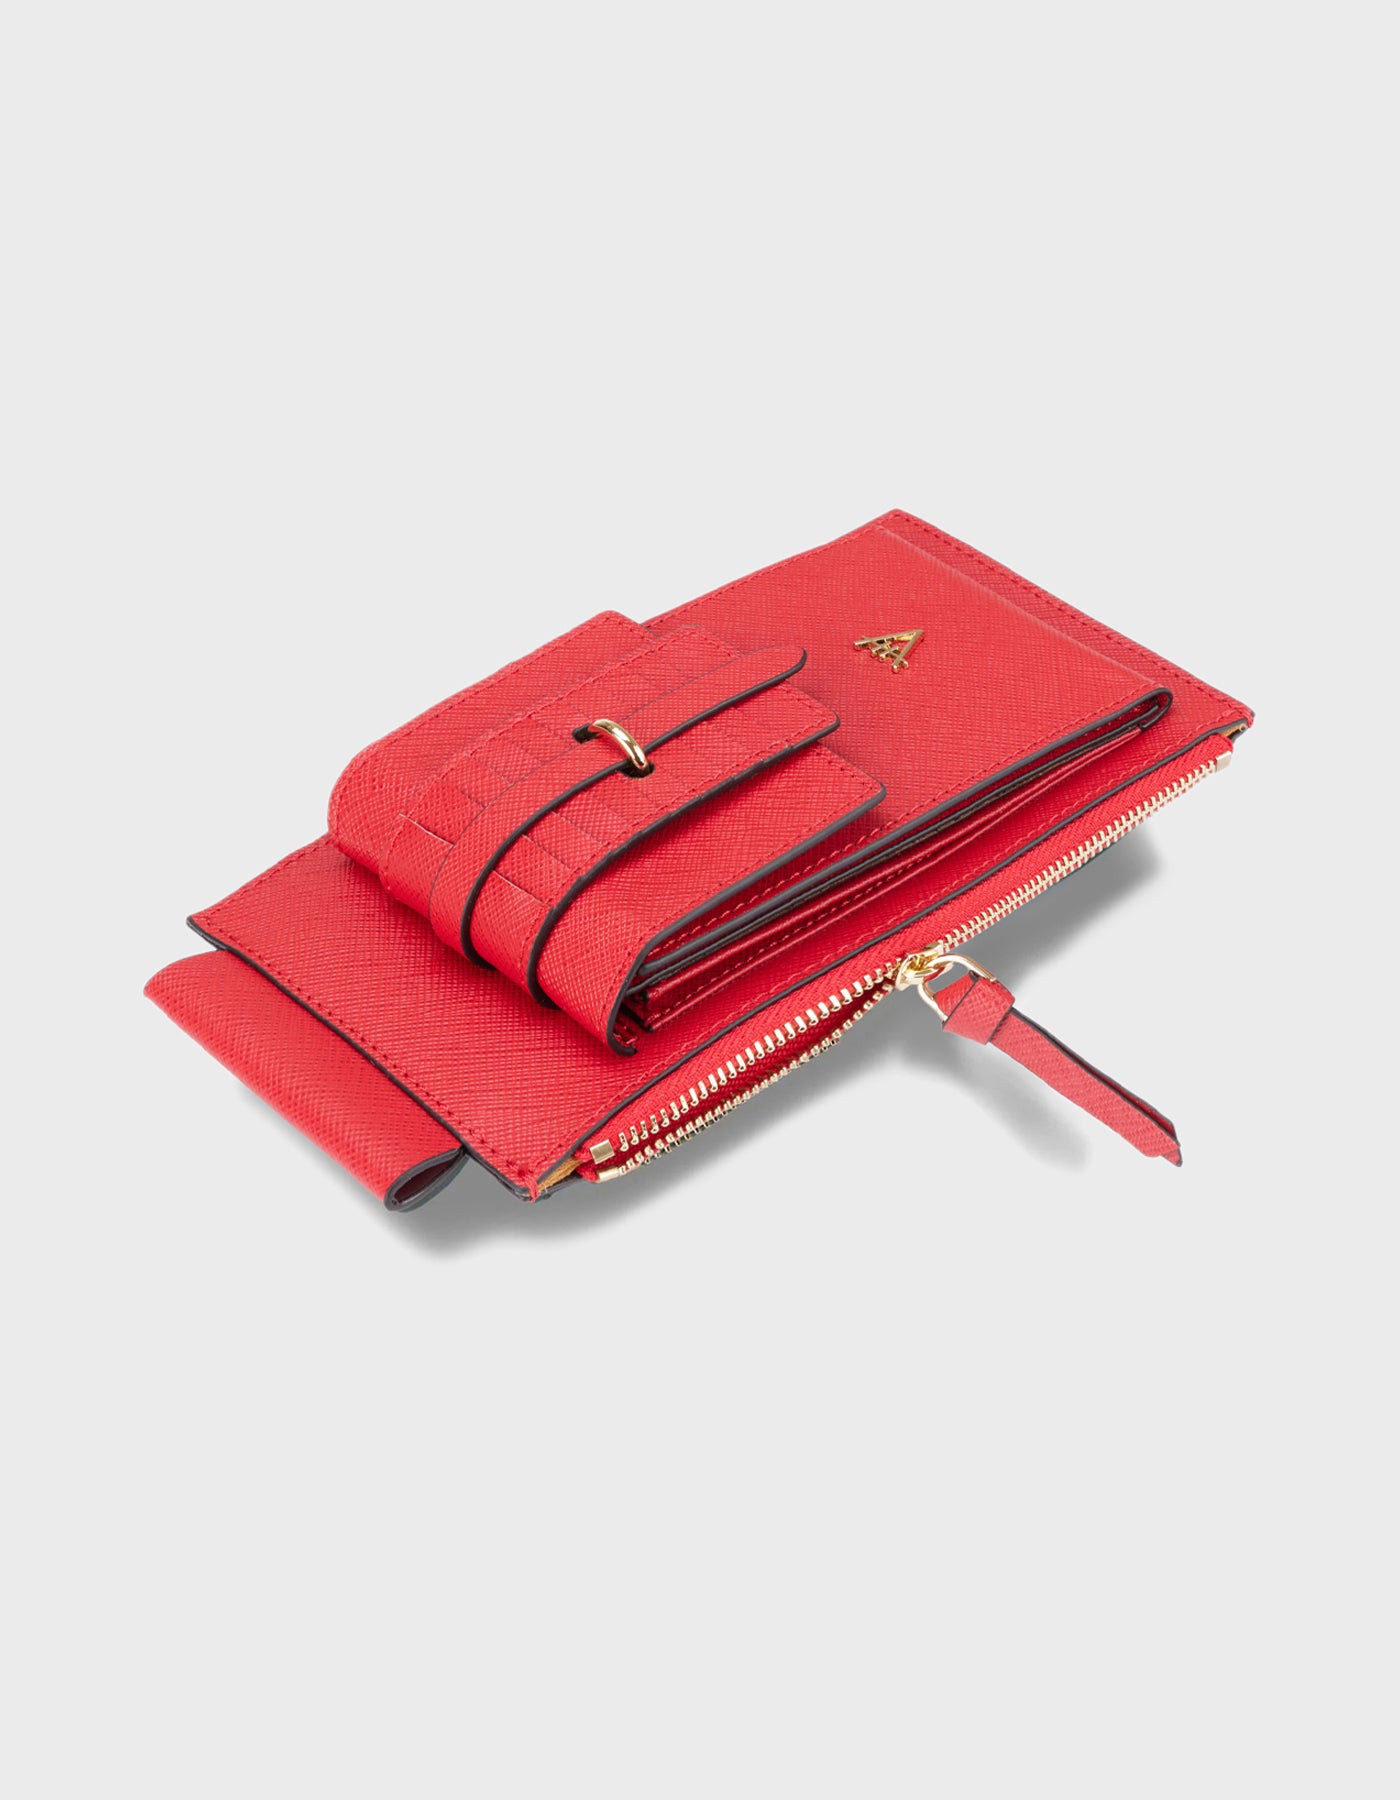 HiVa Atelier | Crossbody Phone Bag Red | Beautiful and Versatile